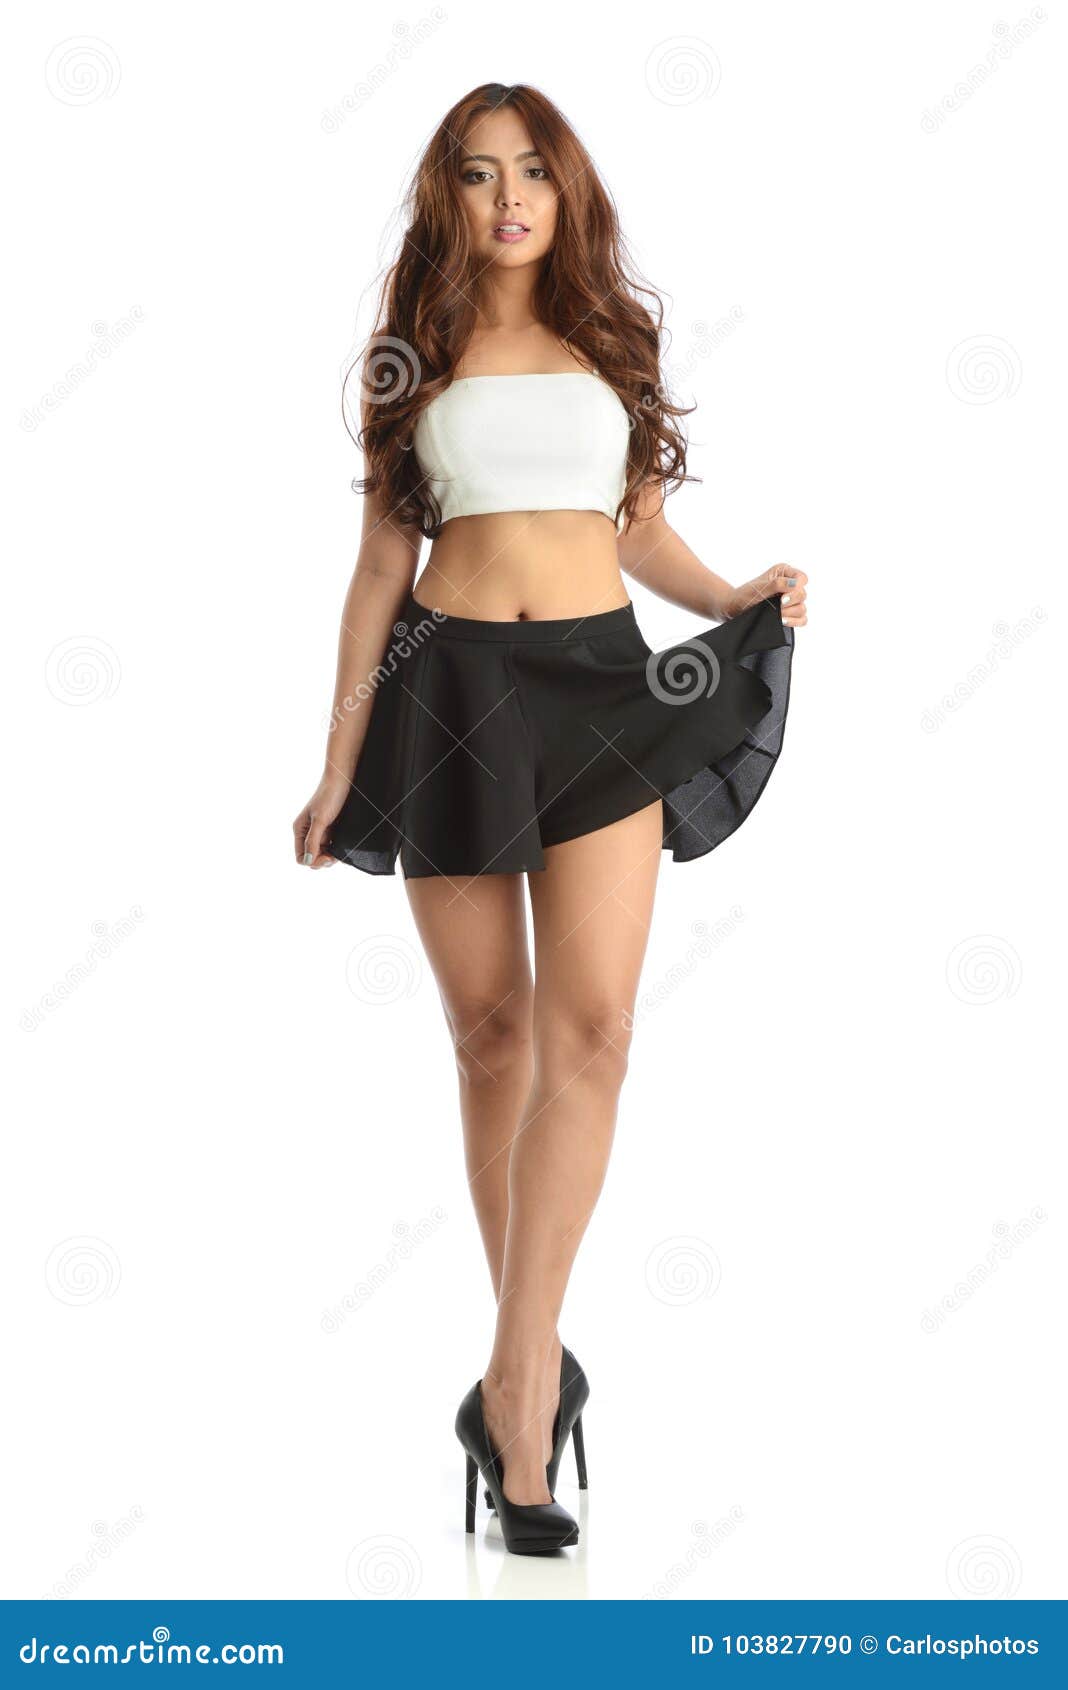 Short Skirt Public - Short Skirt Asian Public - Free XXX Images, Best Sex Photos ...